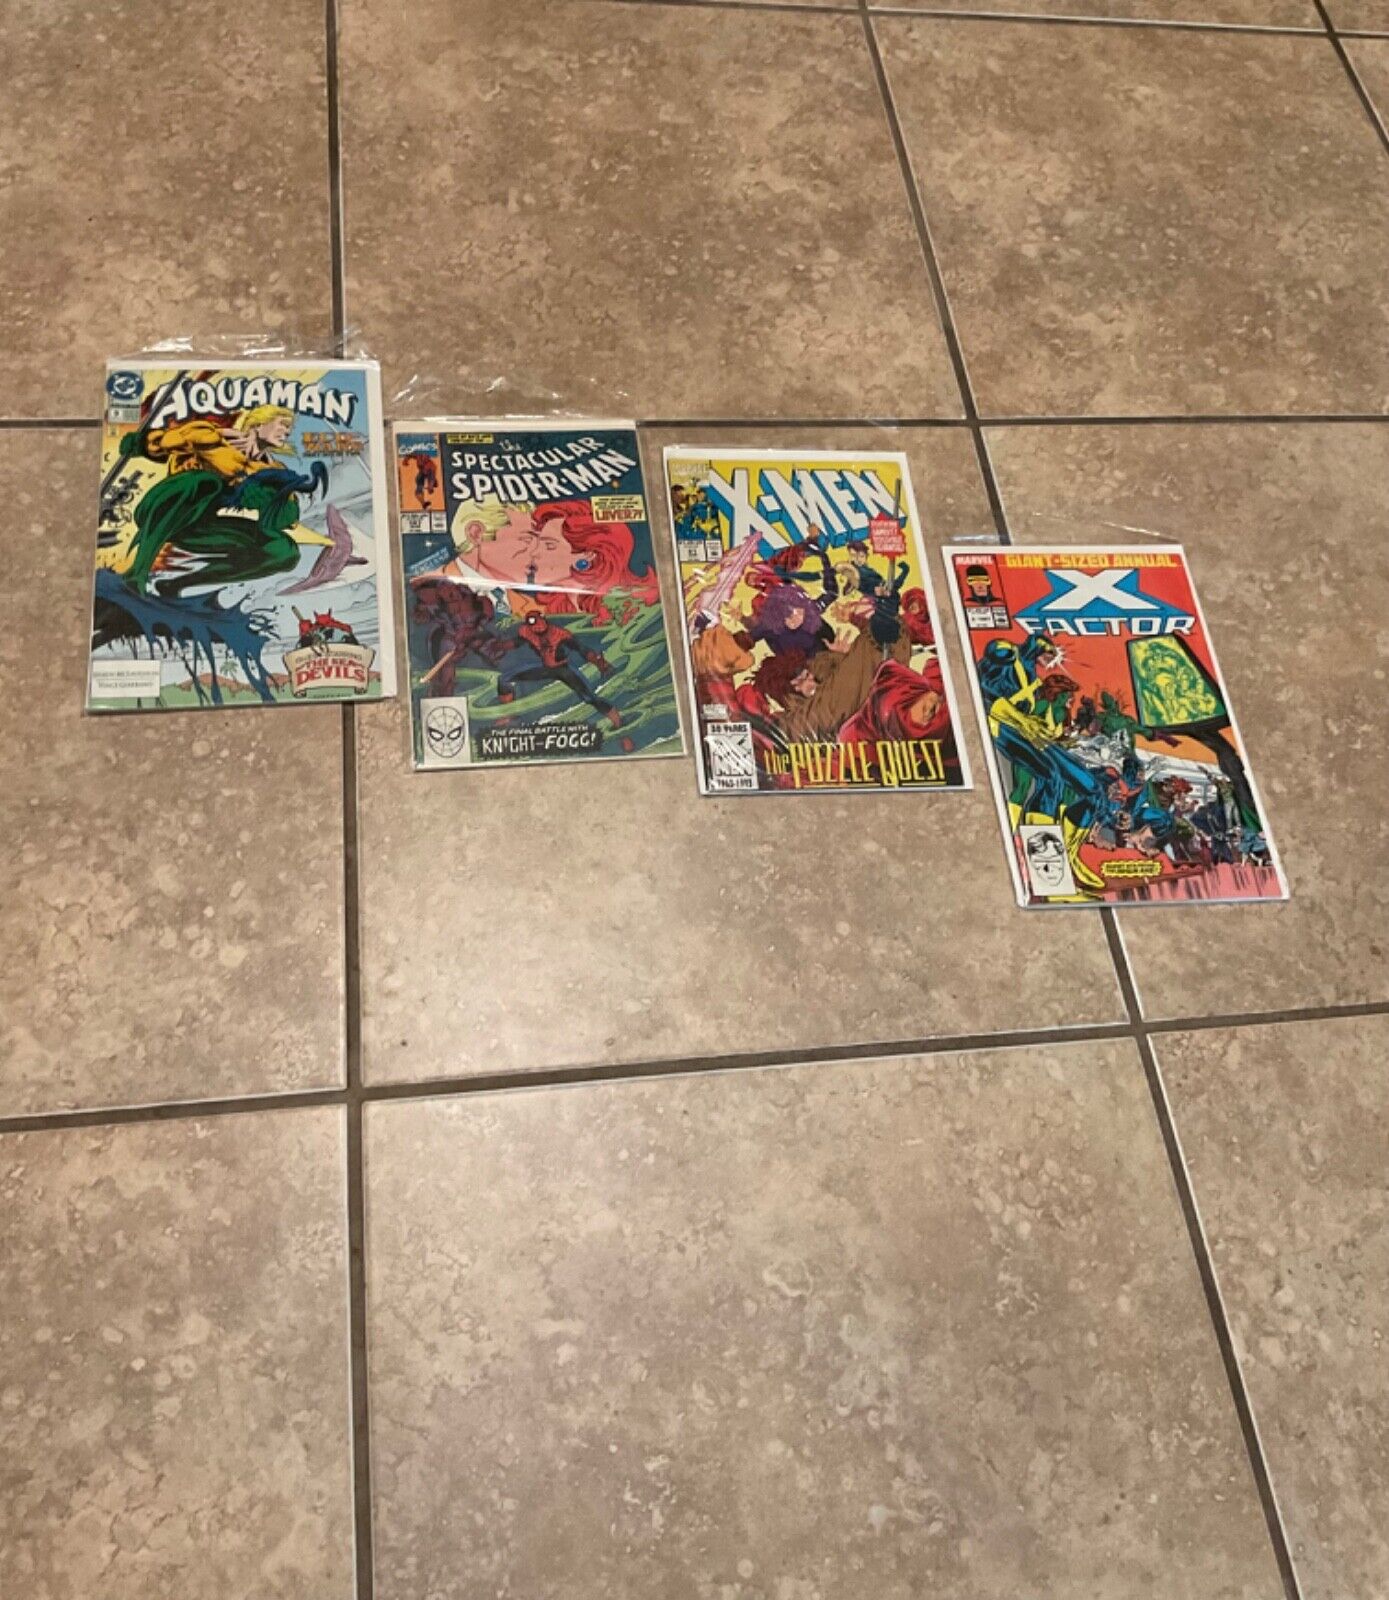 Lot of 6 different Modern Age comic books- Spider-Man, X-Men, Aquaman